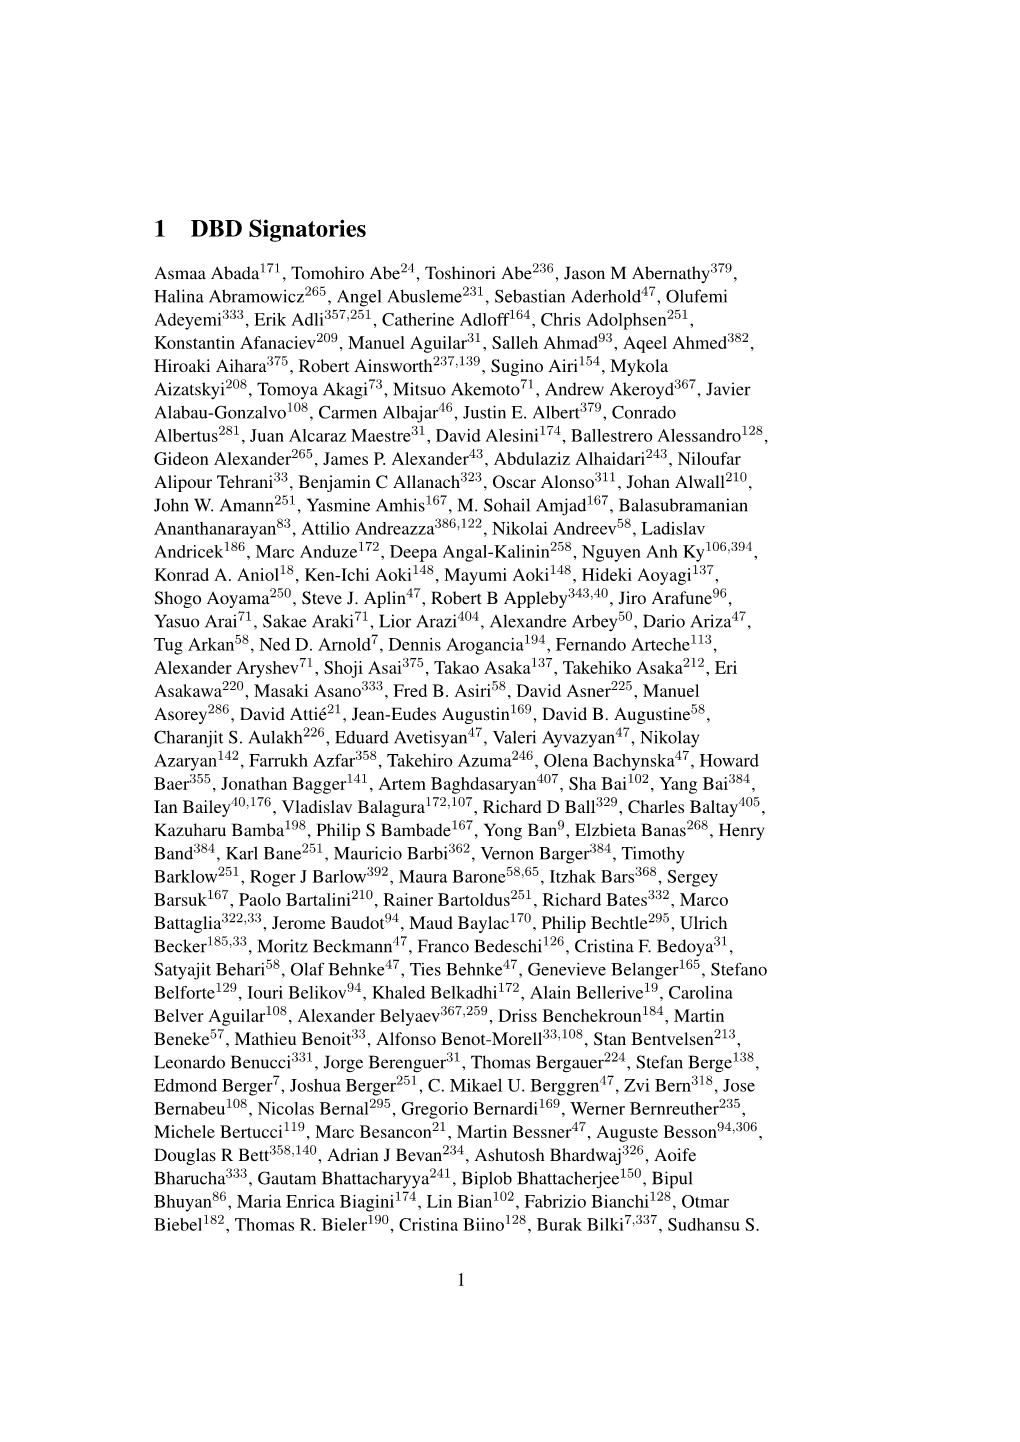 List of Signatories